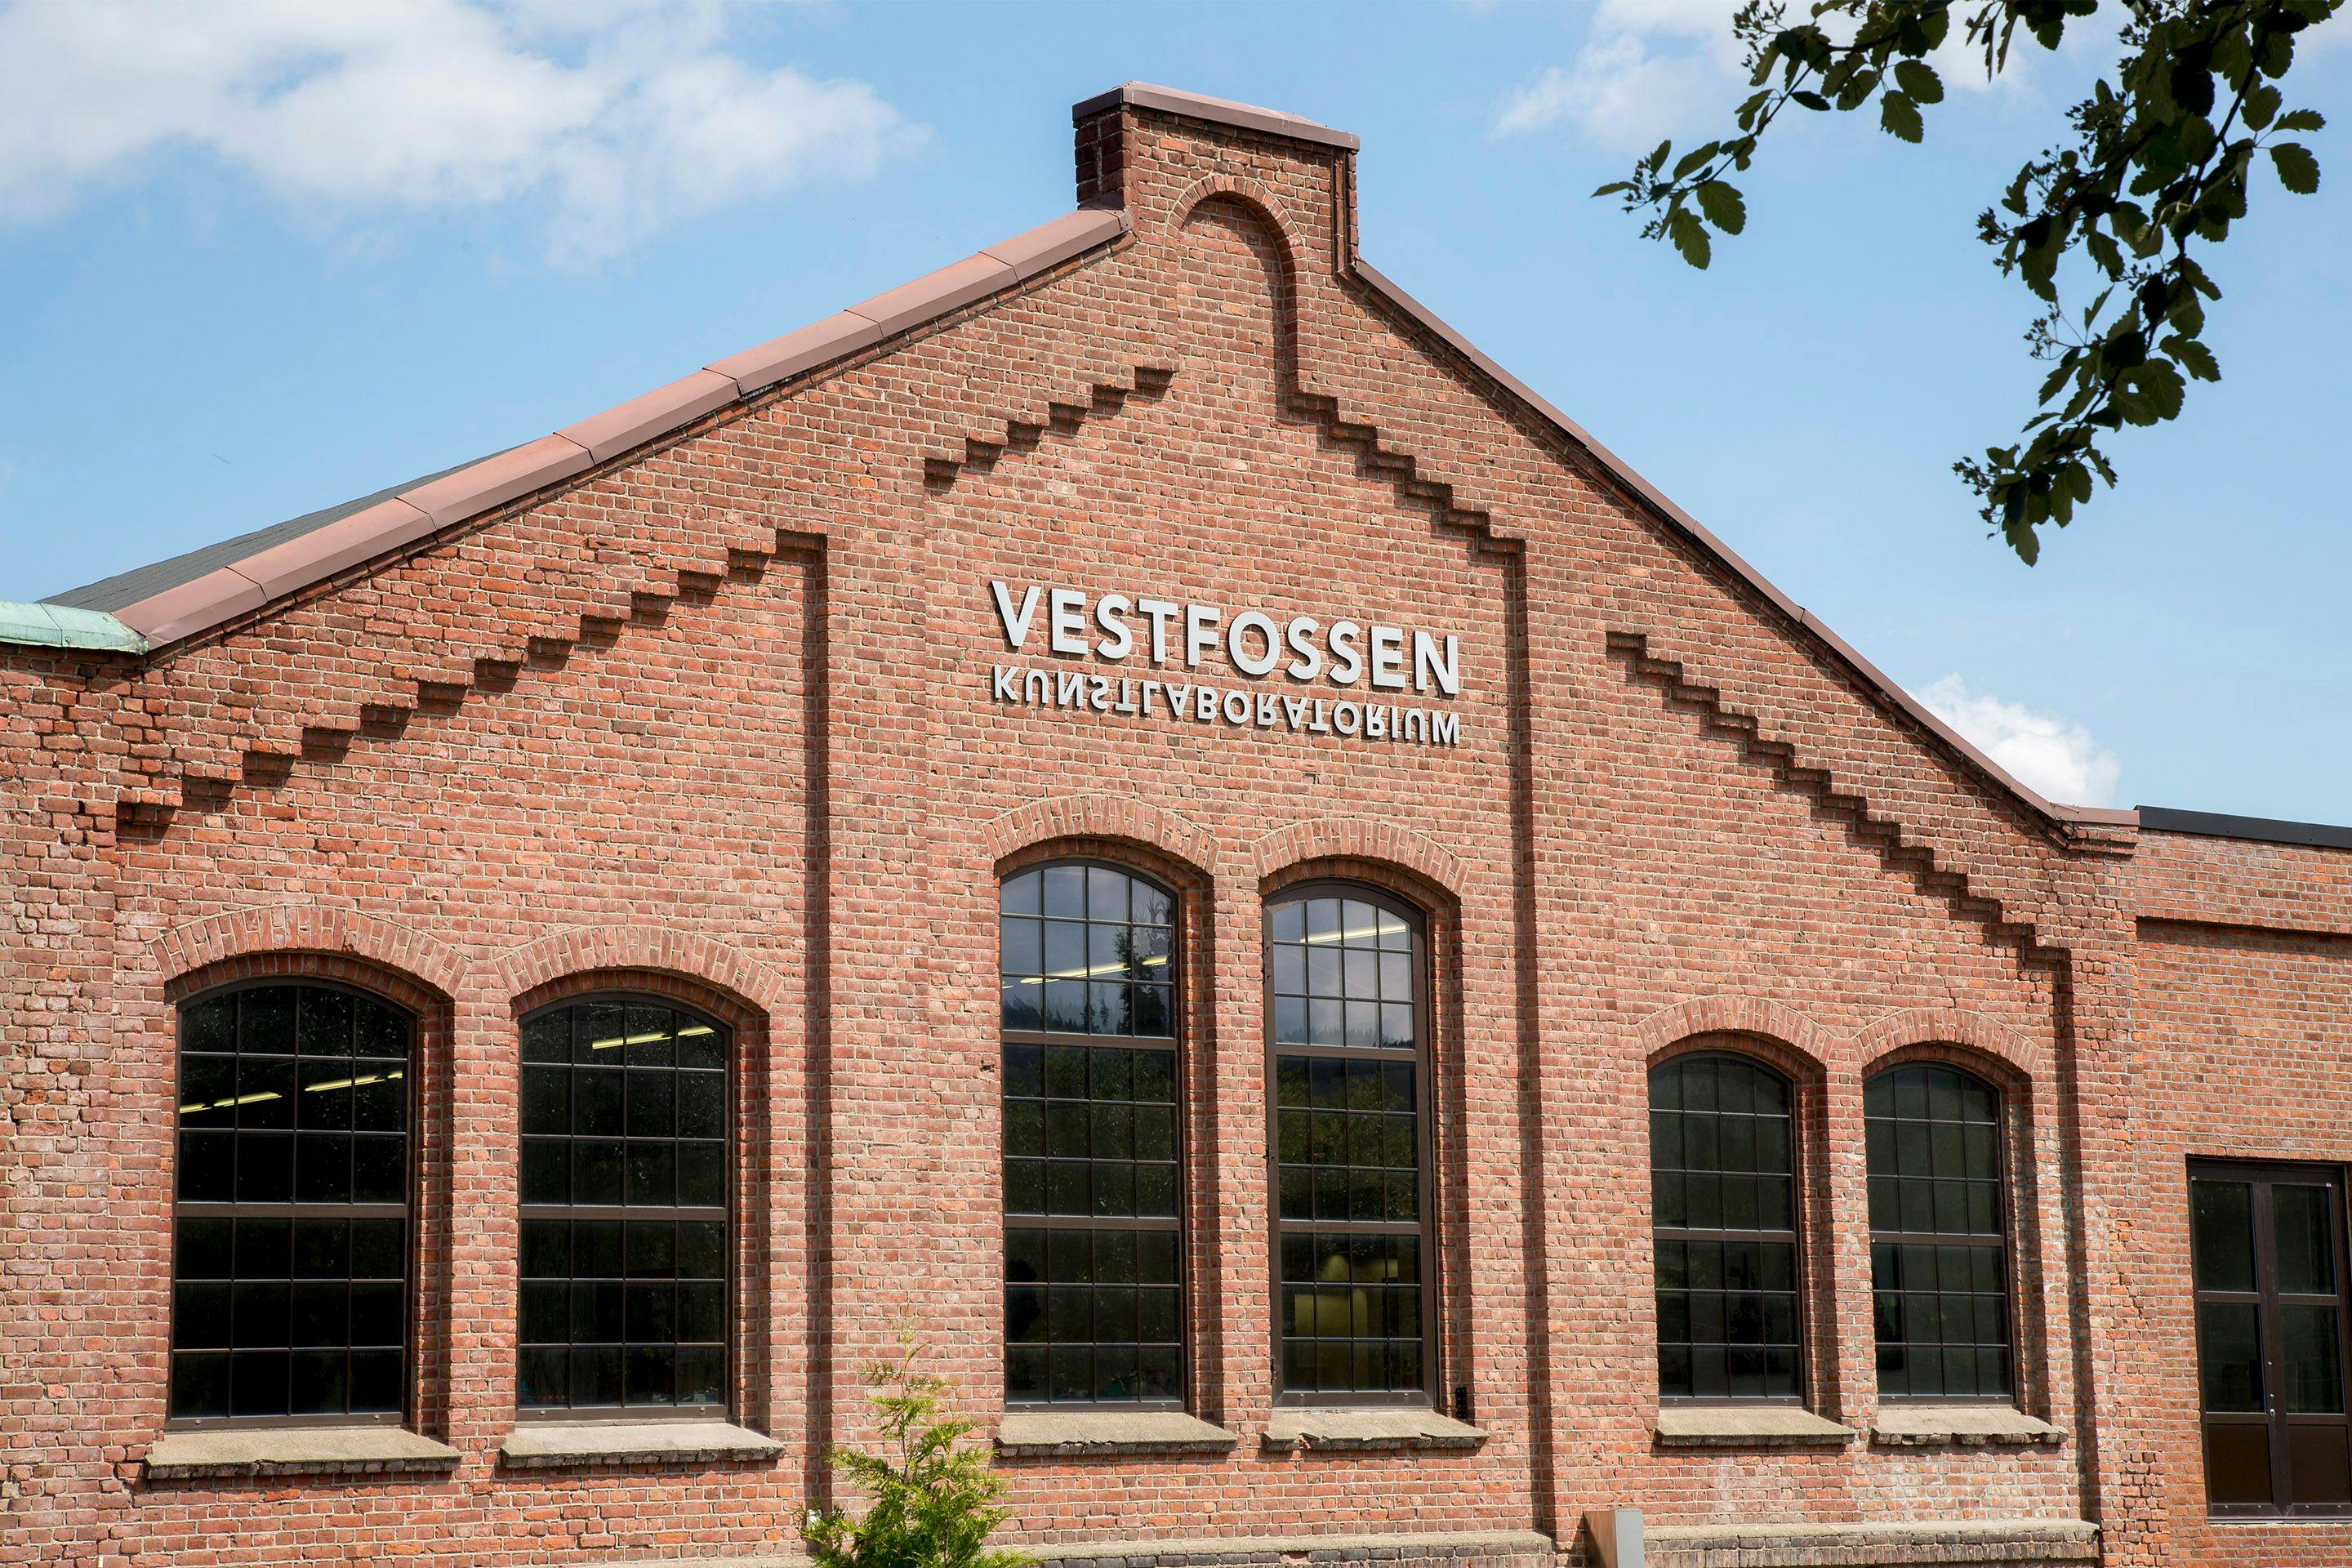 The facade of the main building of Vestfossen Kunstlaboratorium.